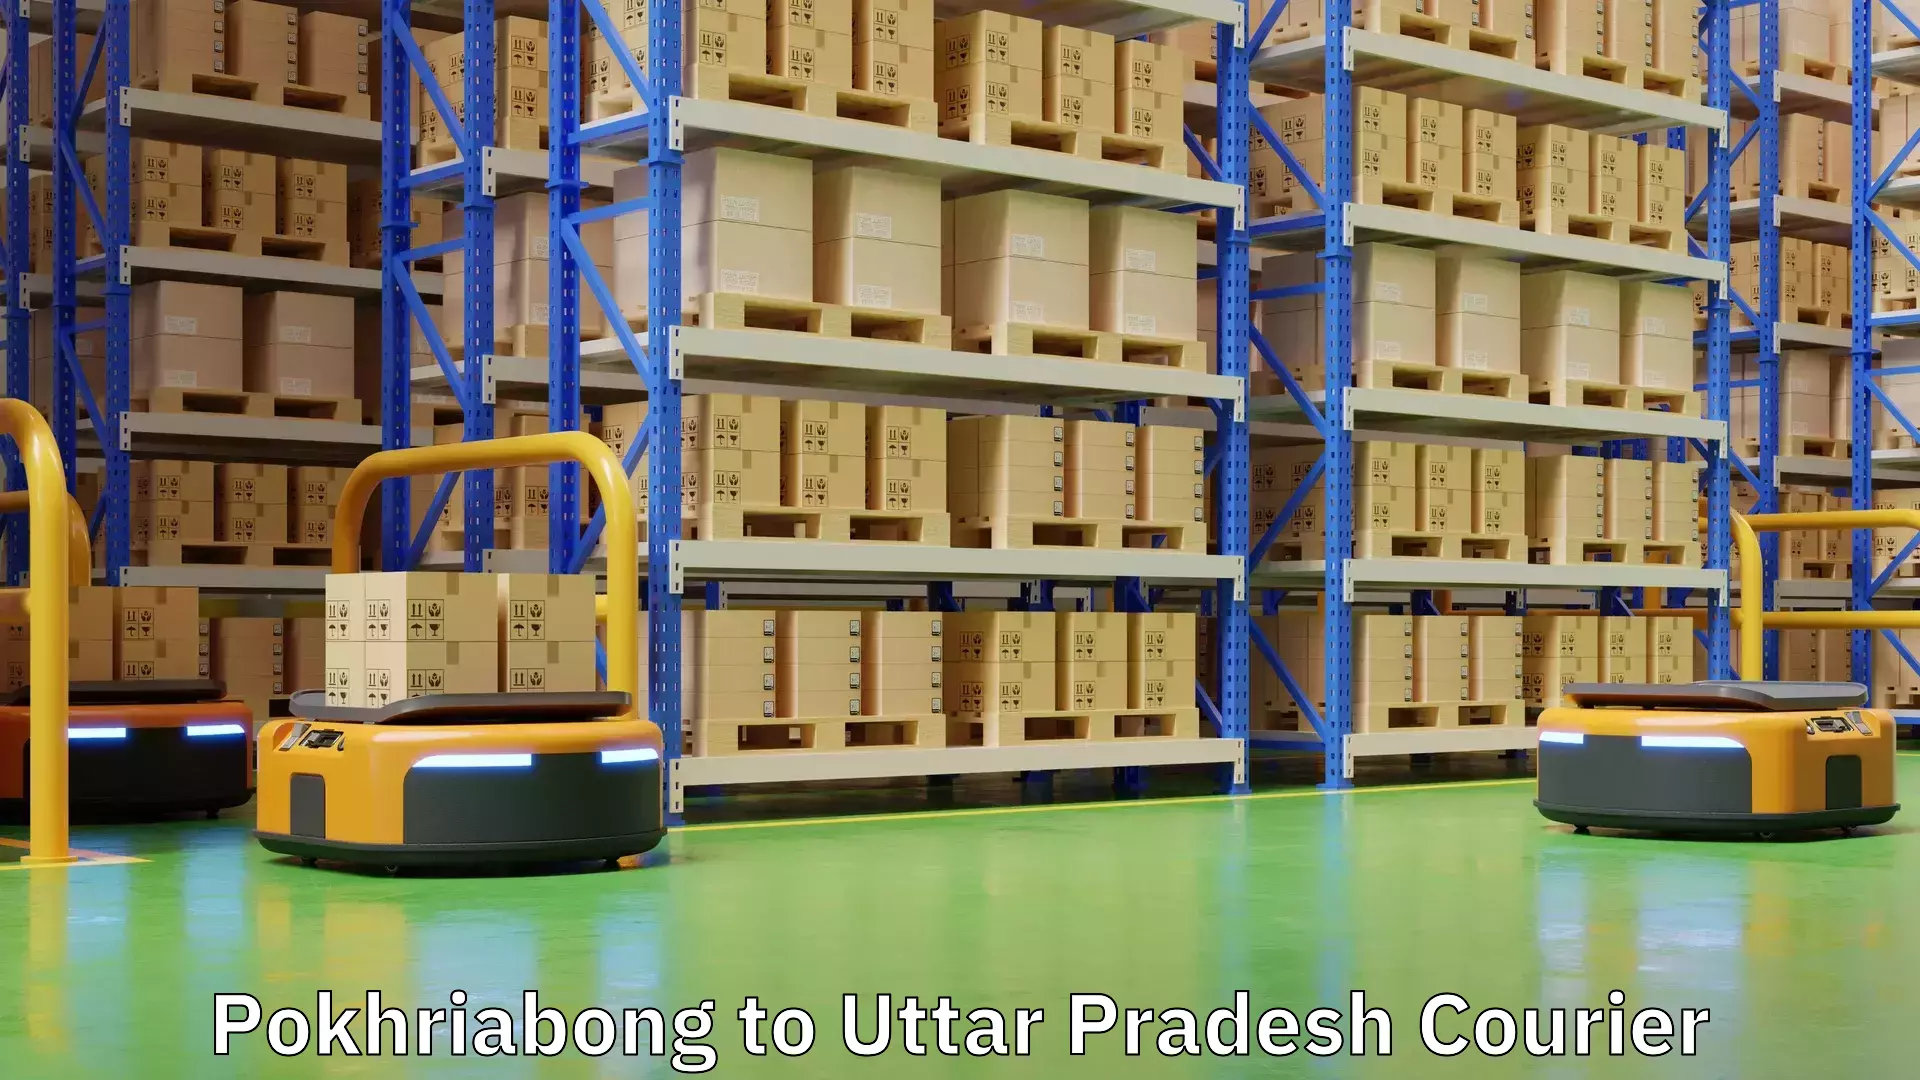 Courier service partnerships Pokhriabong to Uttar Pradesh